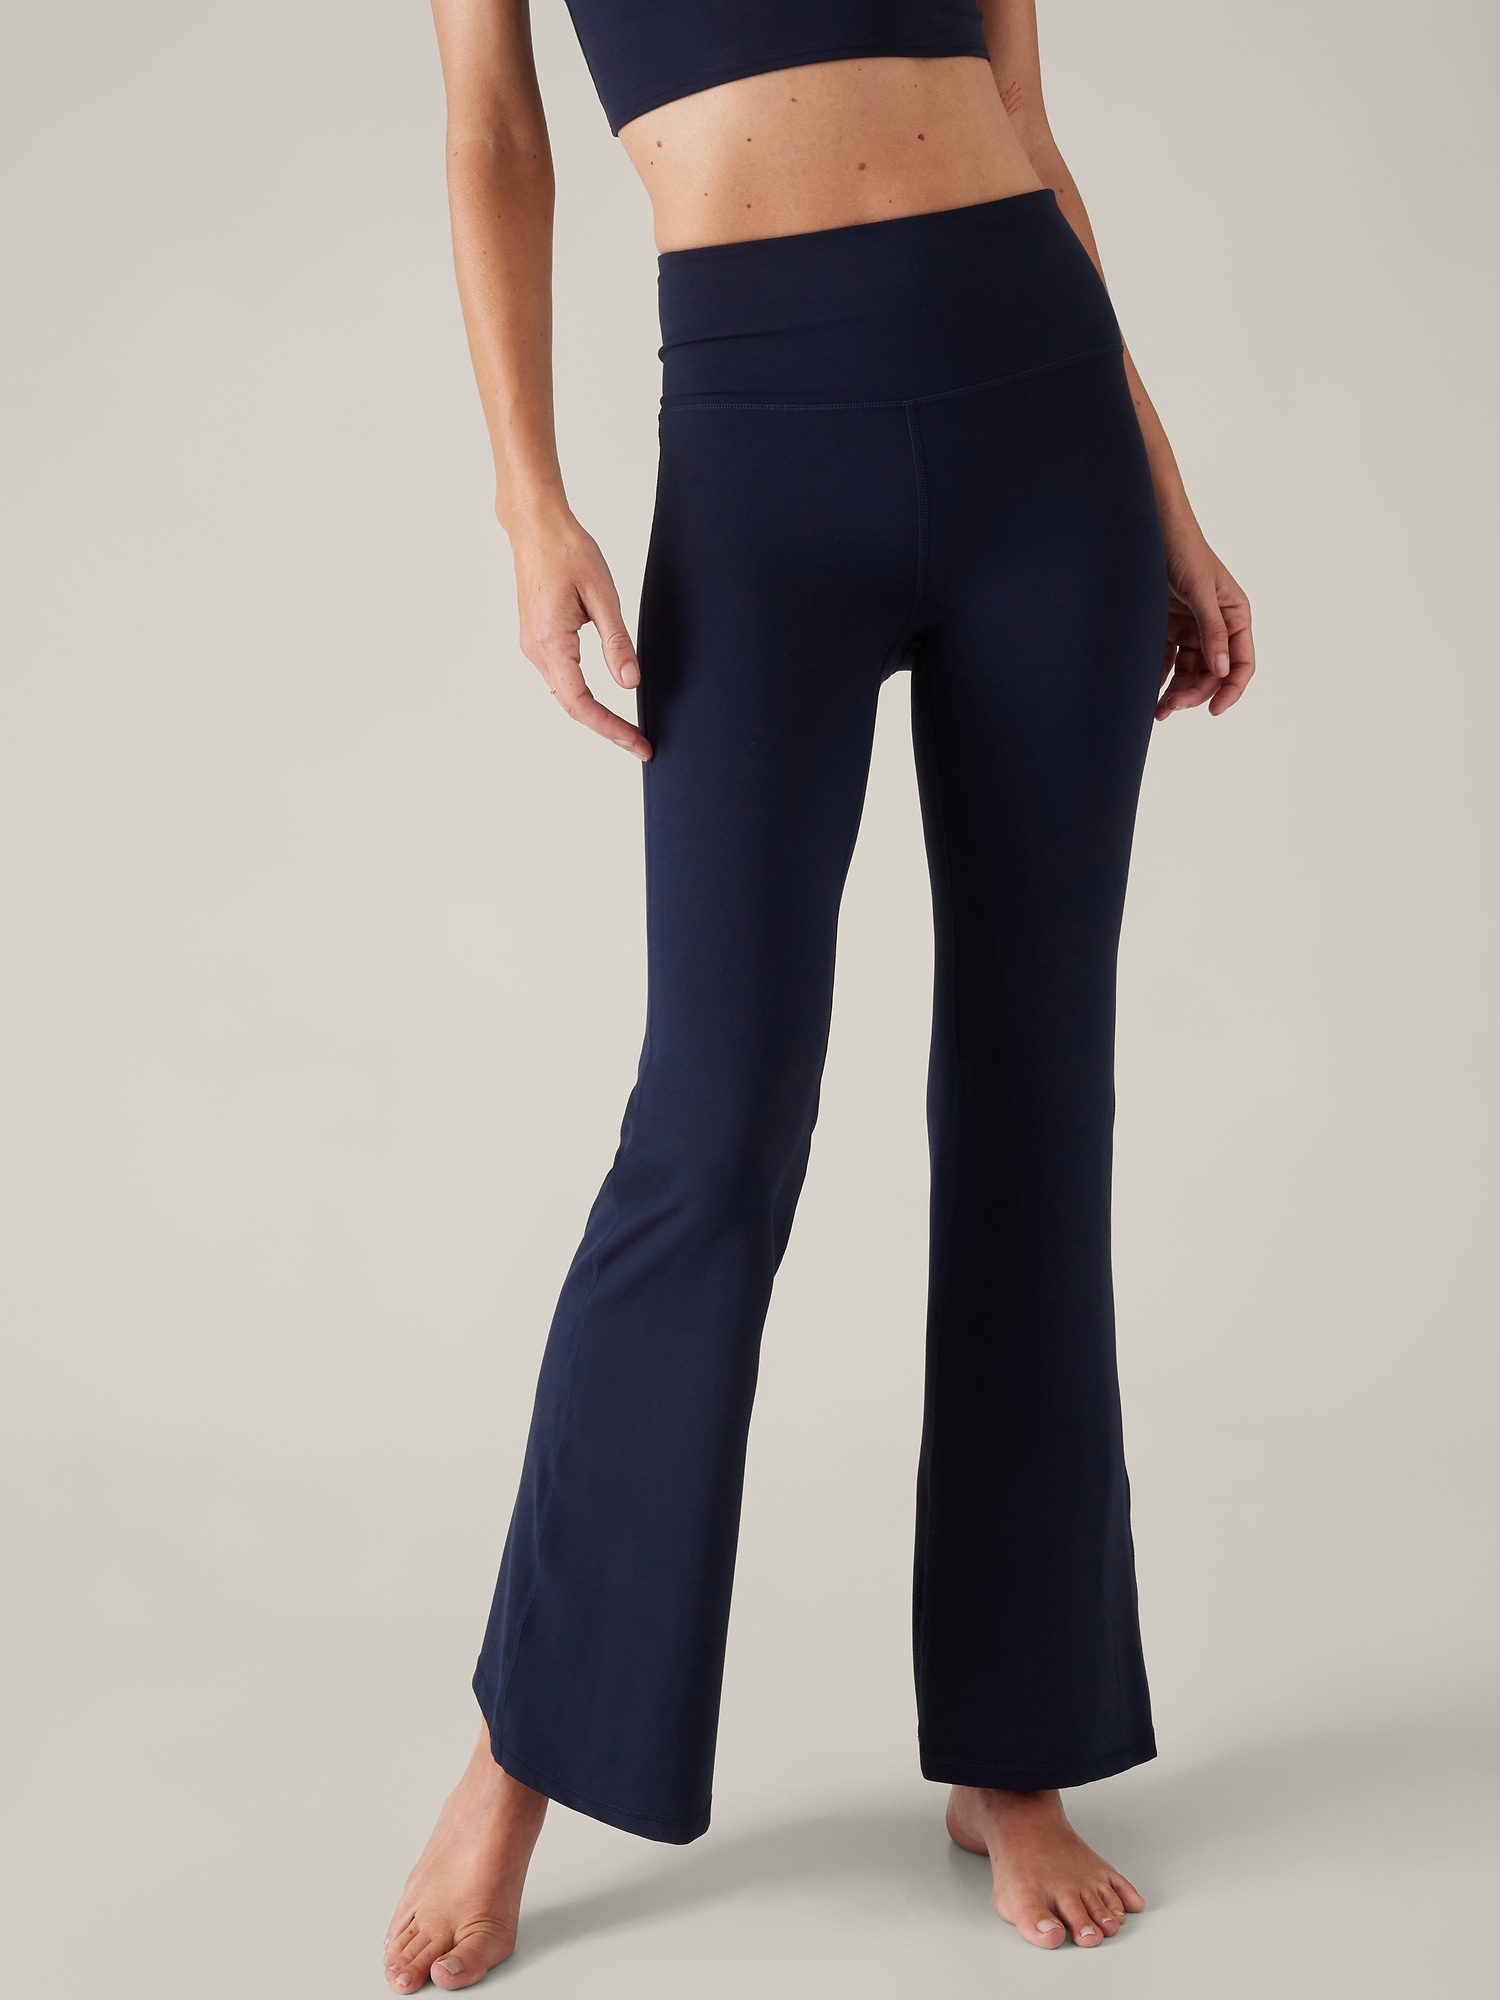 1960s Pants - Top Ten Styles for Women-hkpdtq2012.edu.vn